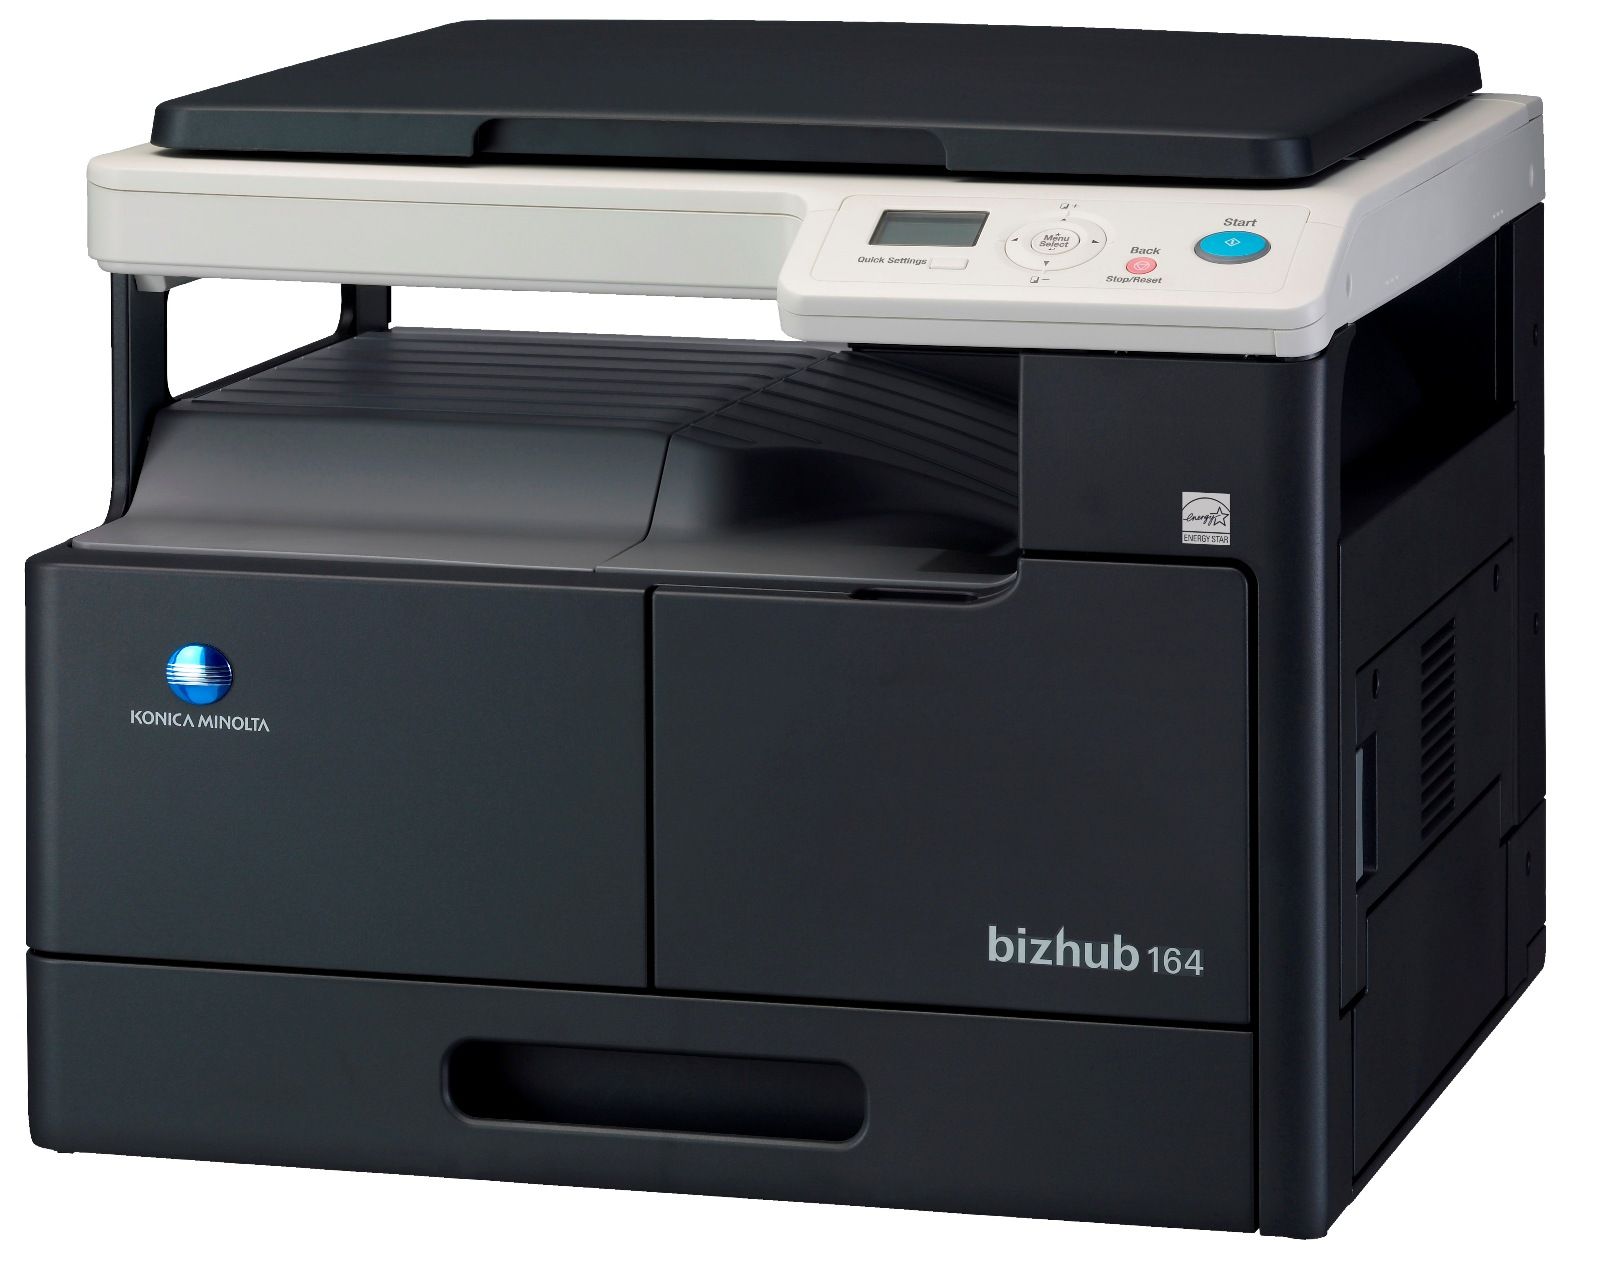 hp psc 1350 printer error